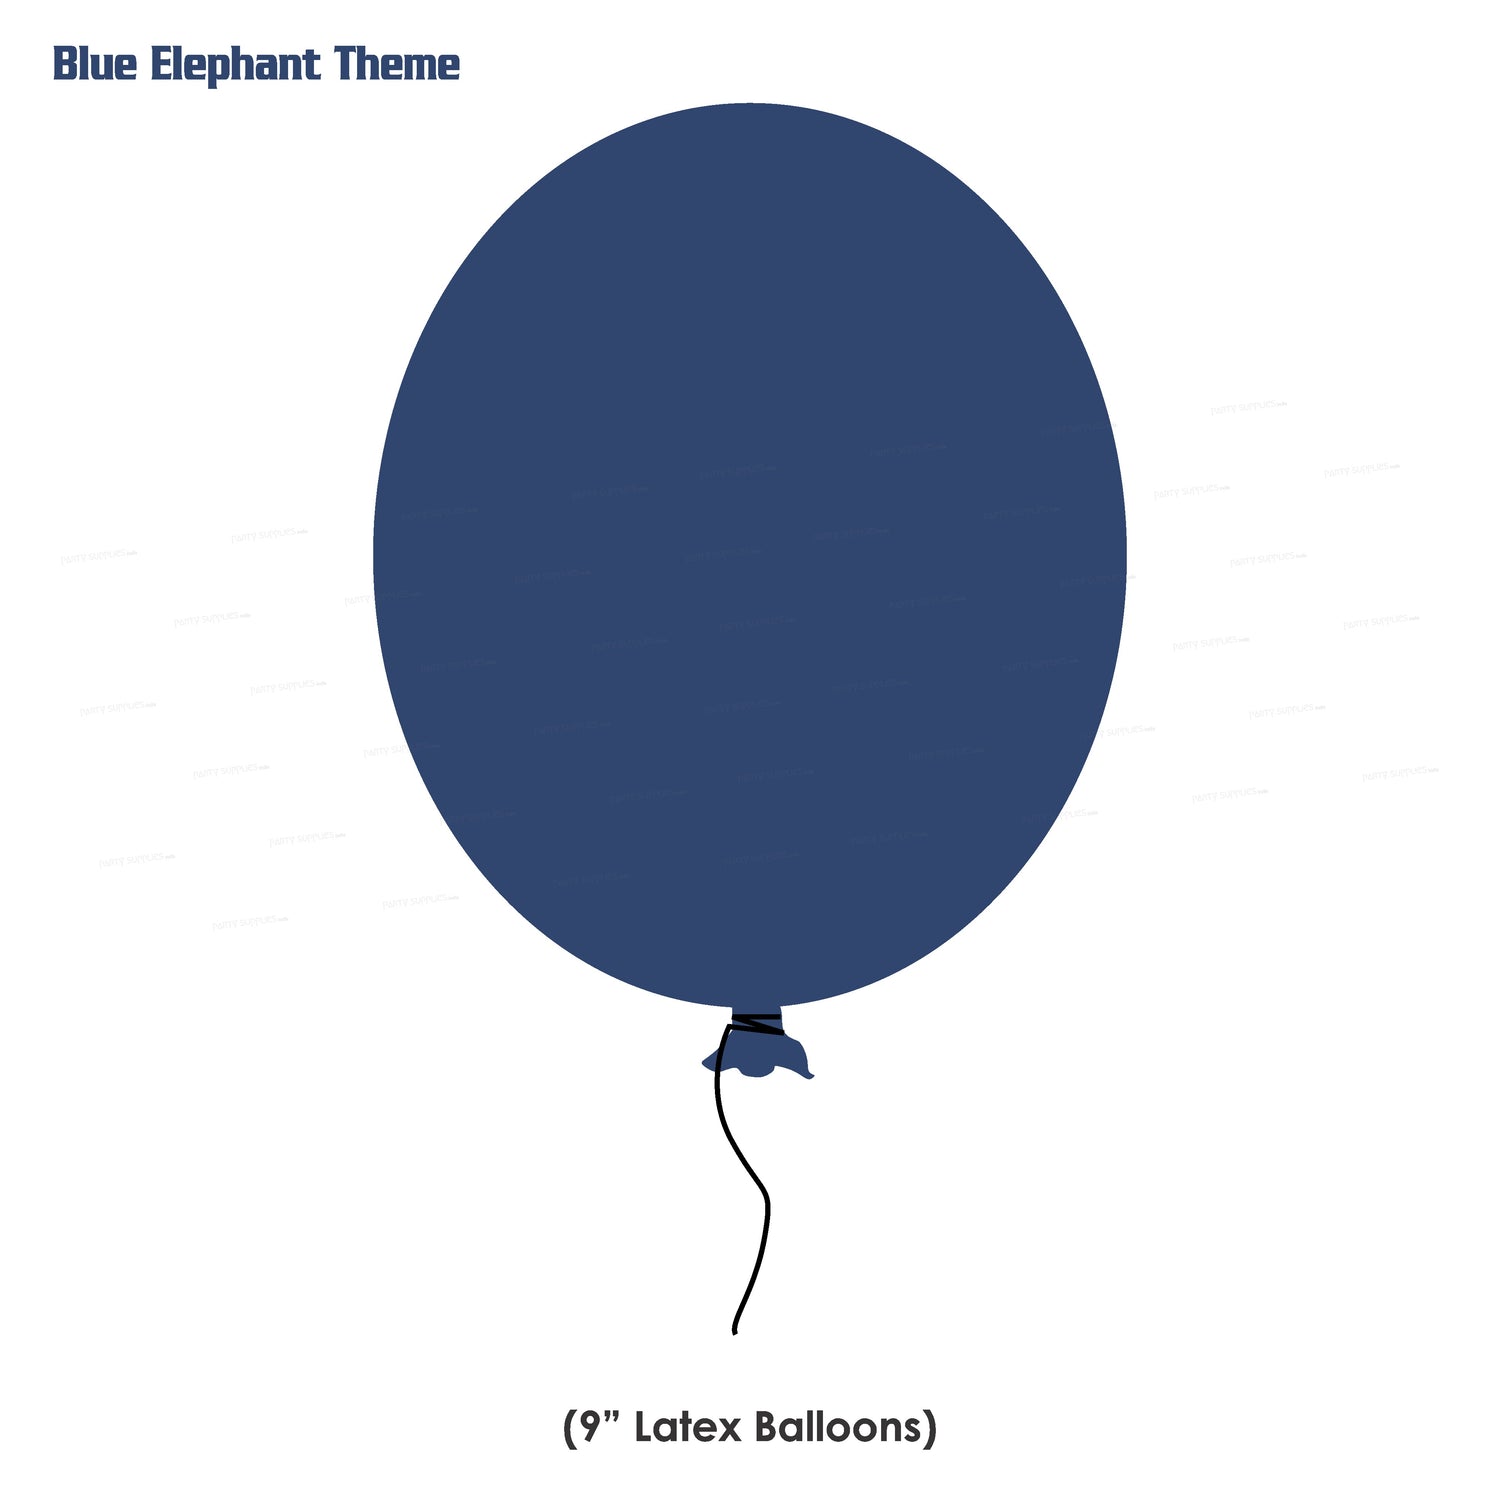 PSI Blue Elephant Theme Colour 60 Pcs Balloons